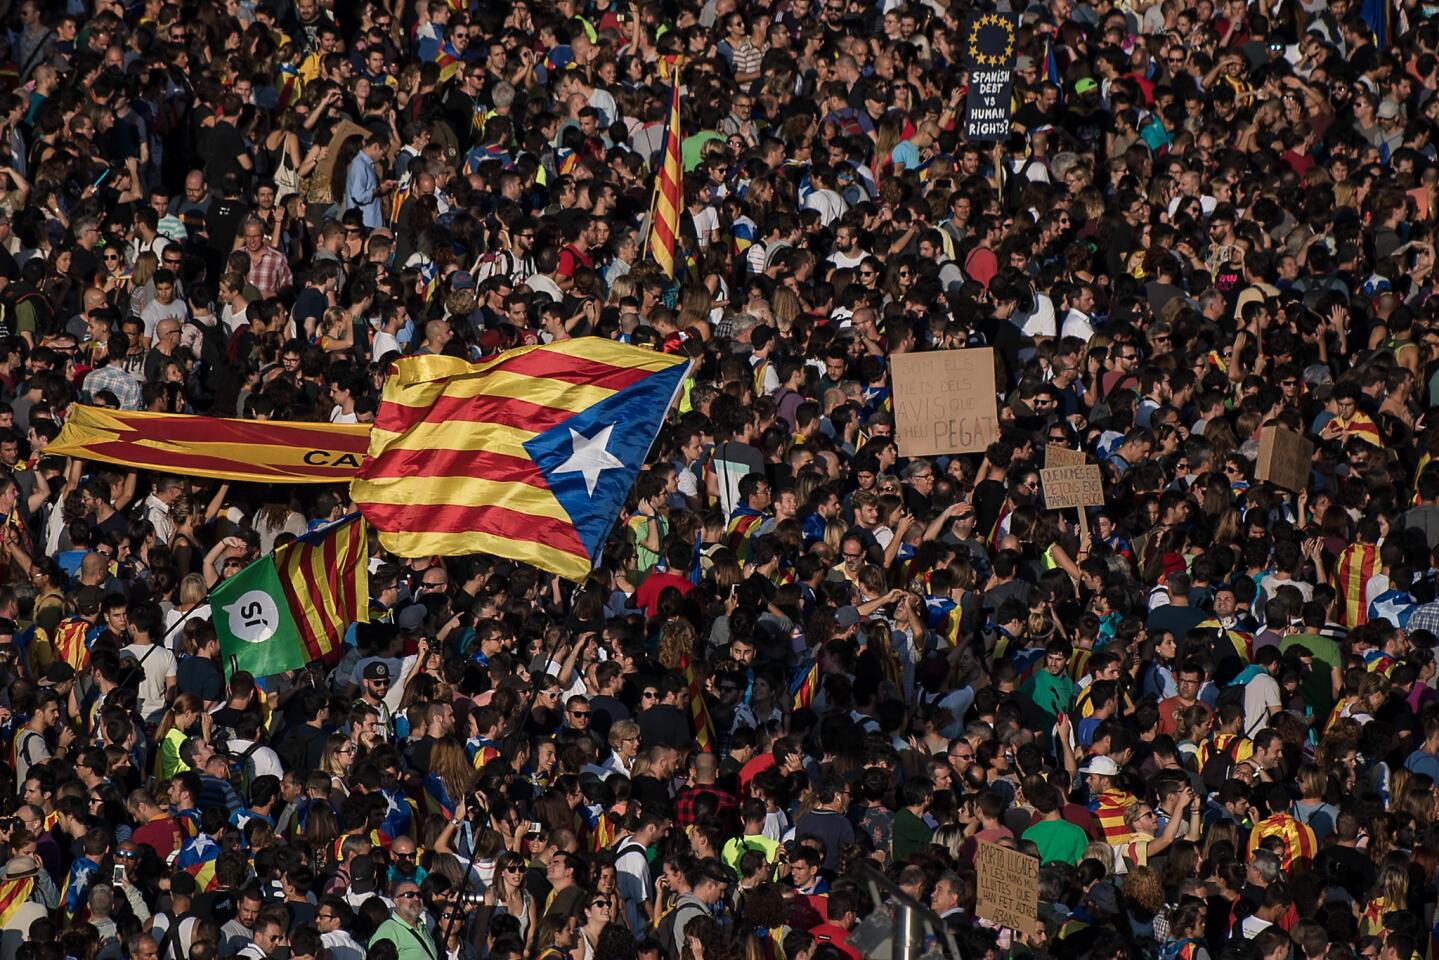 Identity crisis in Spain's Catalonia region